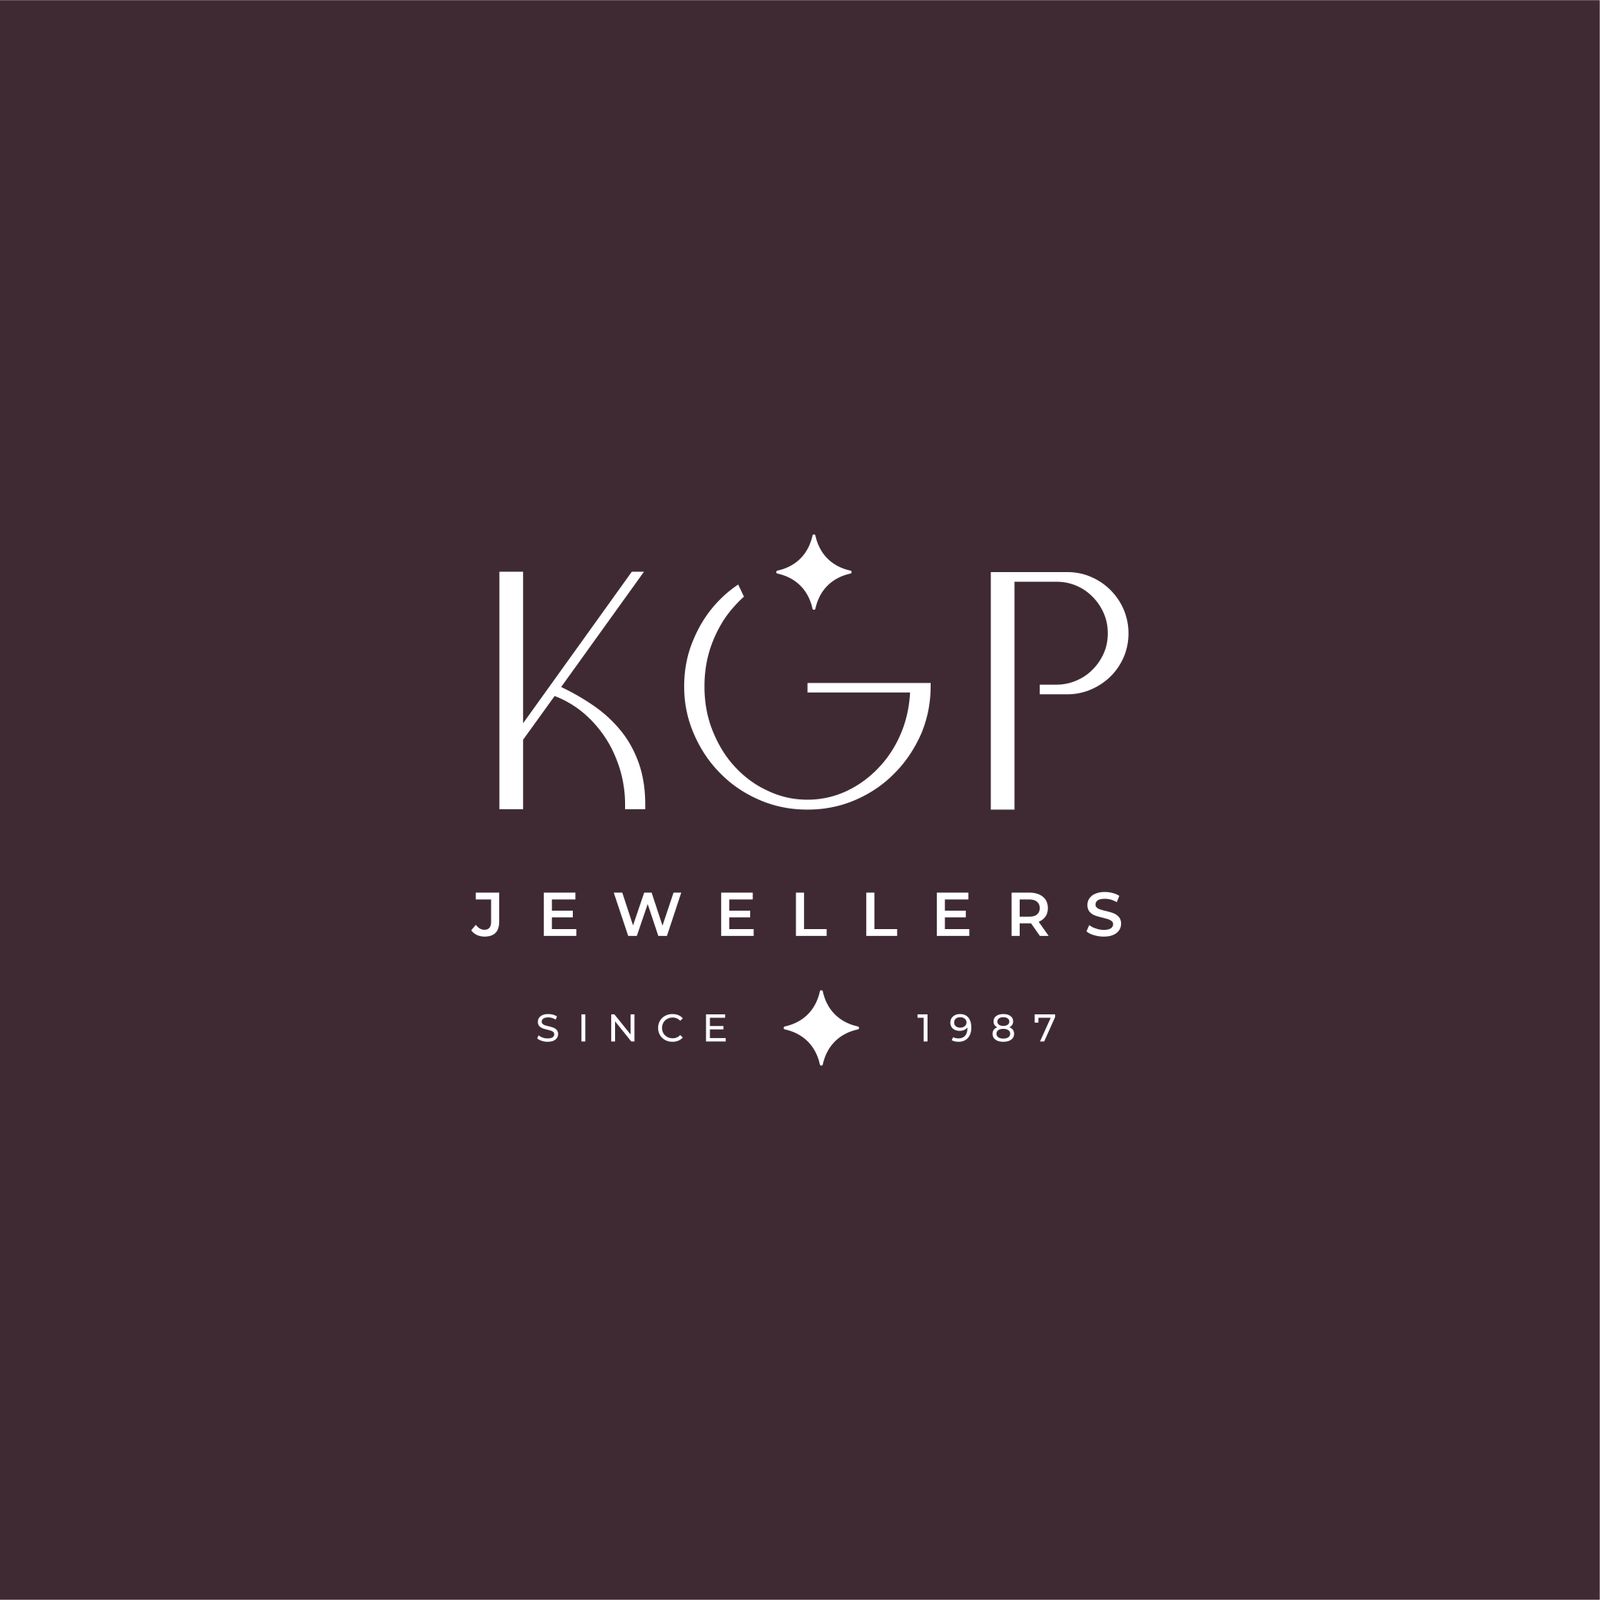 KGP jewellery